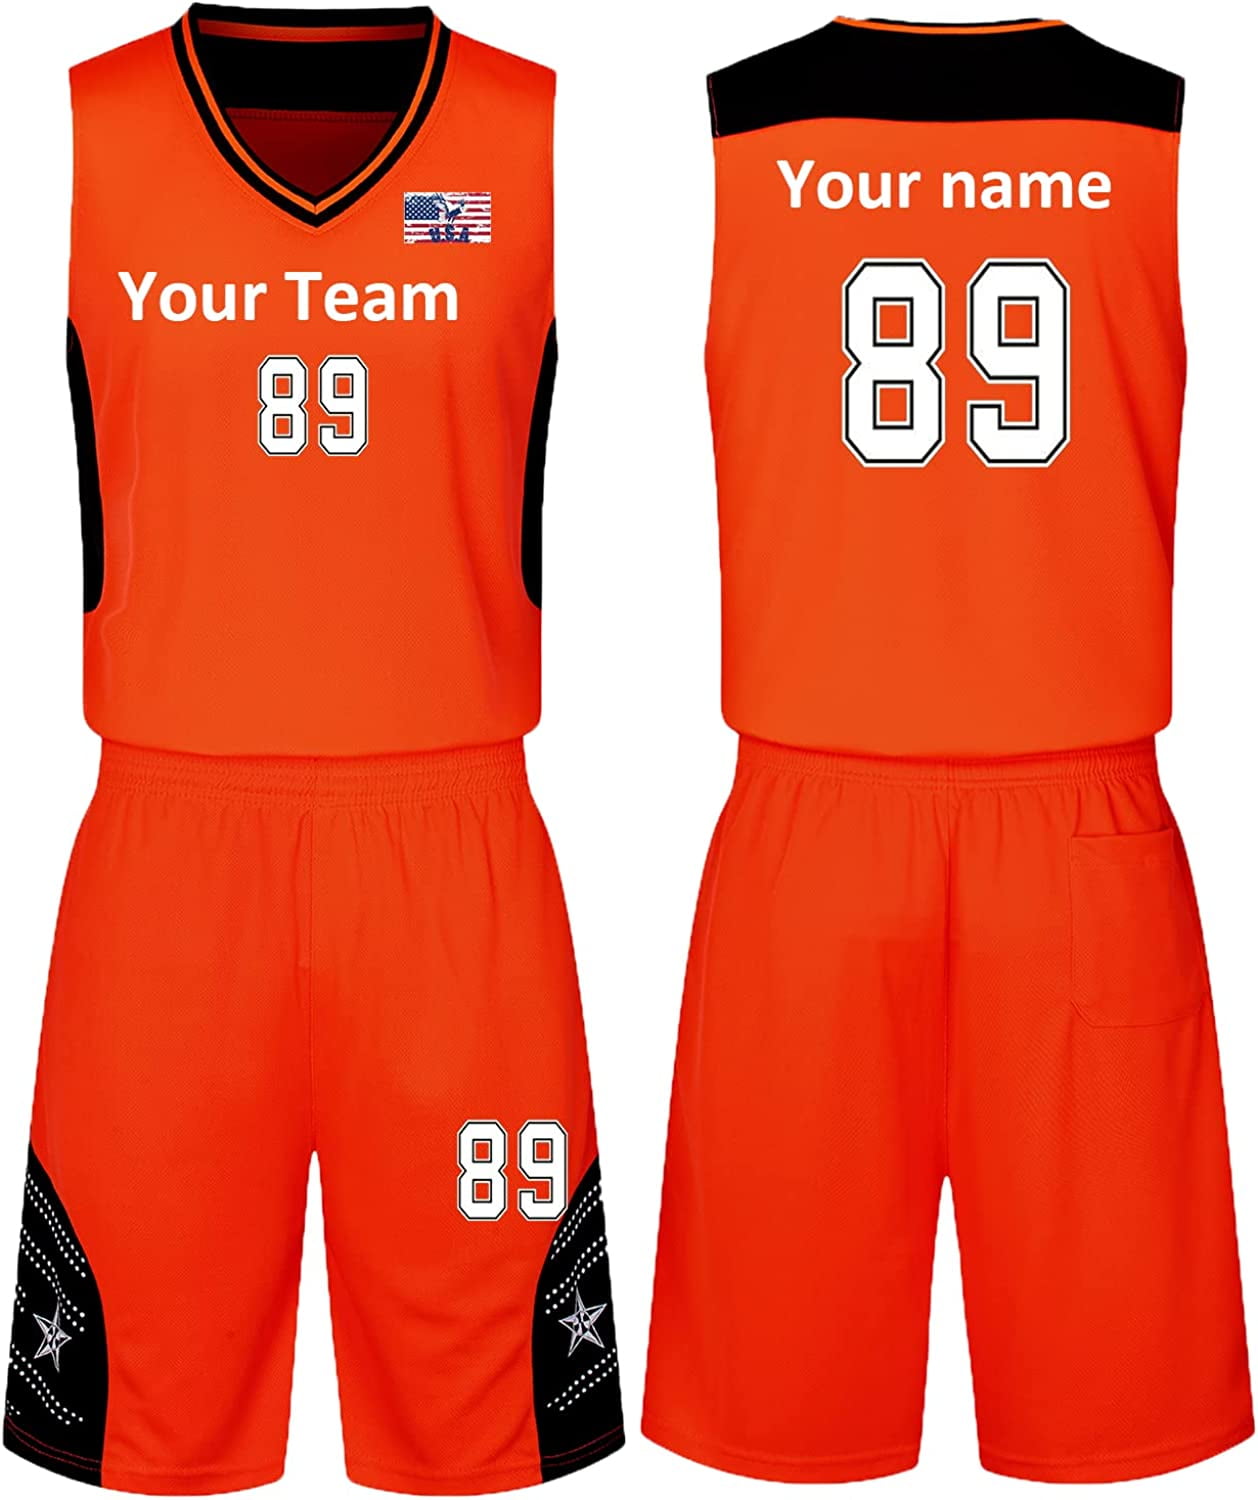 Custom Basketball Jerseys, Basketball Uniforms For Your Team